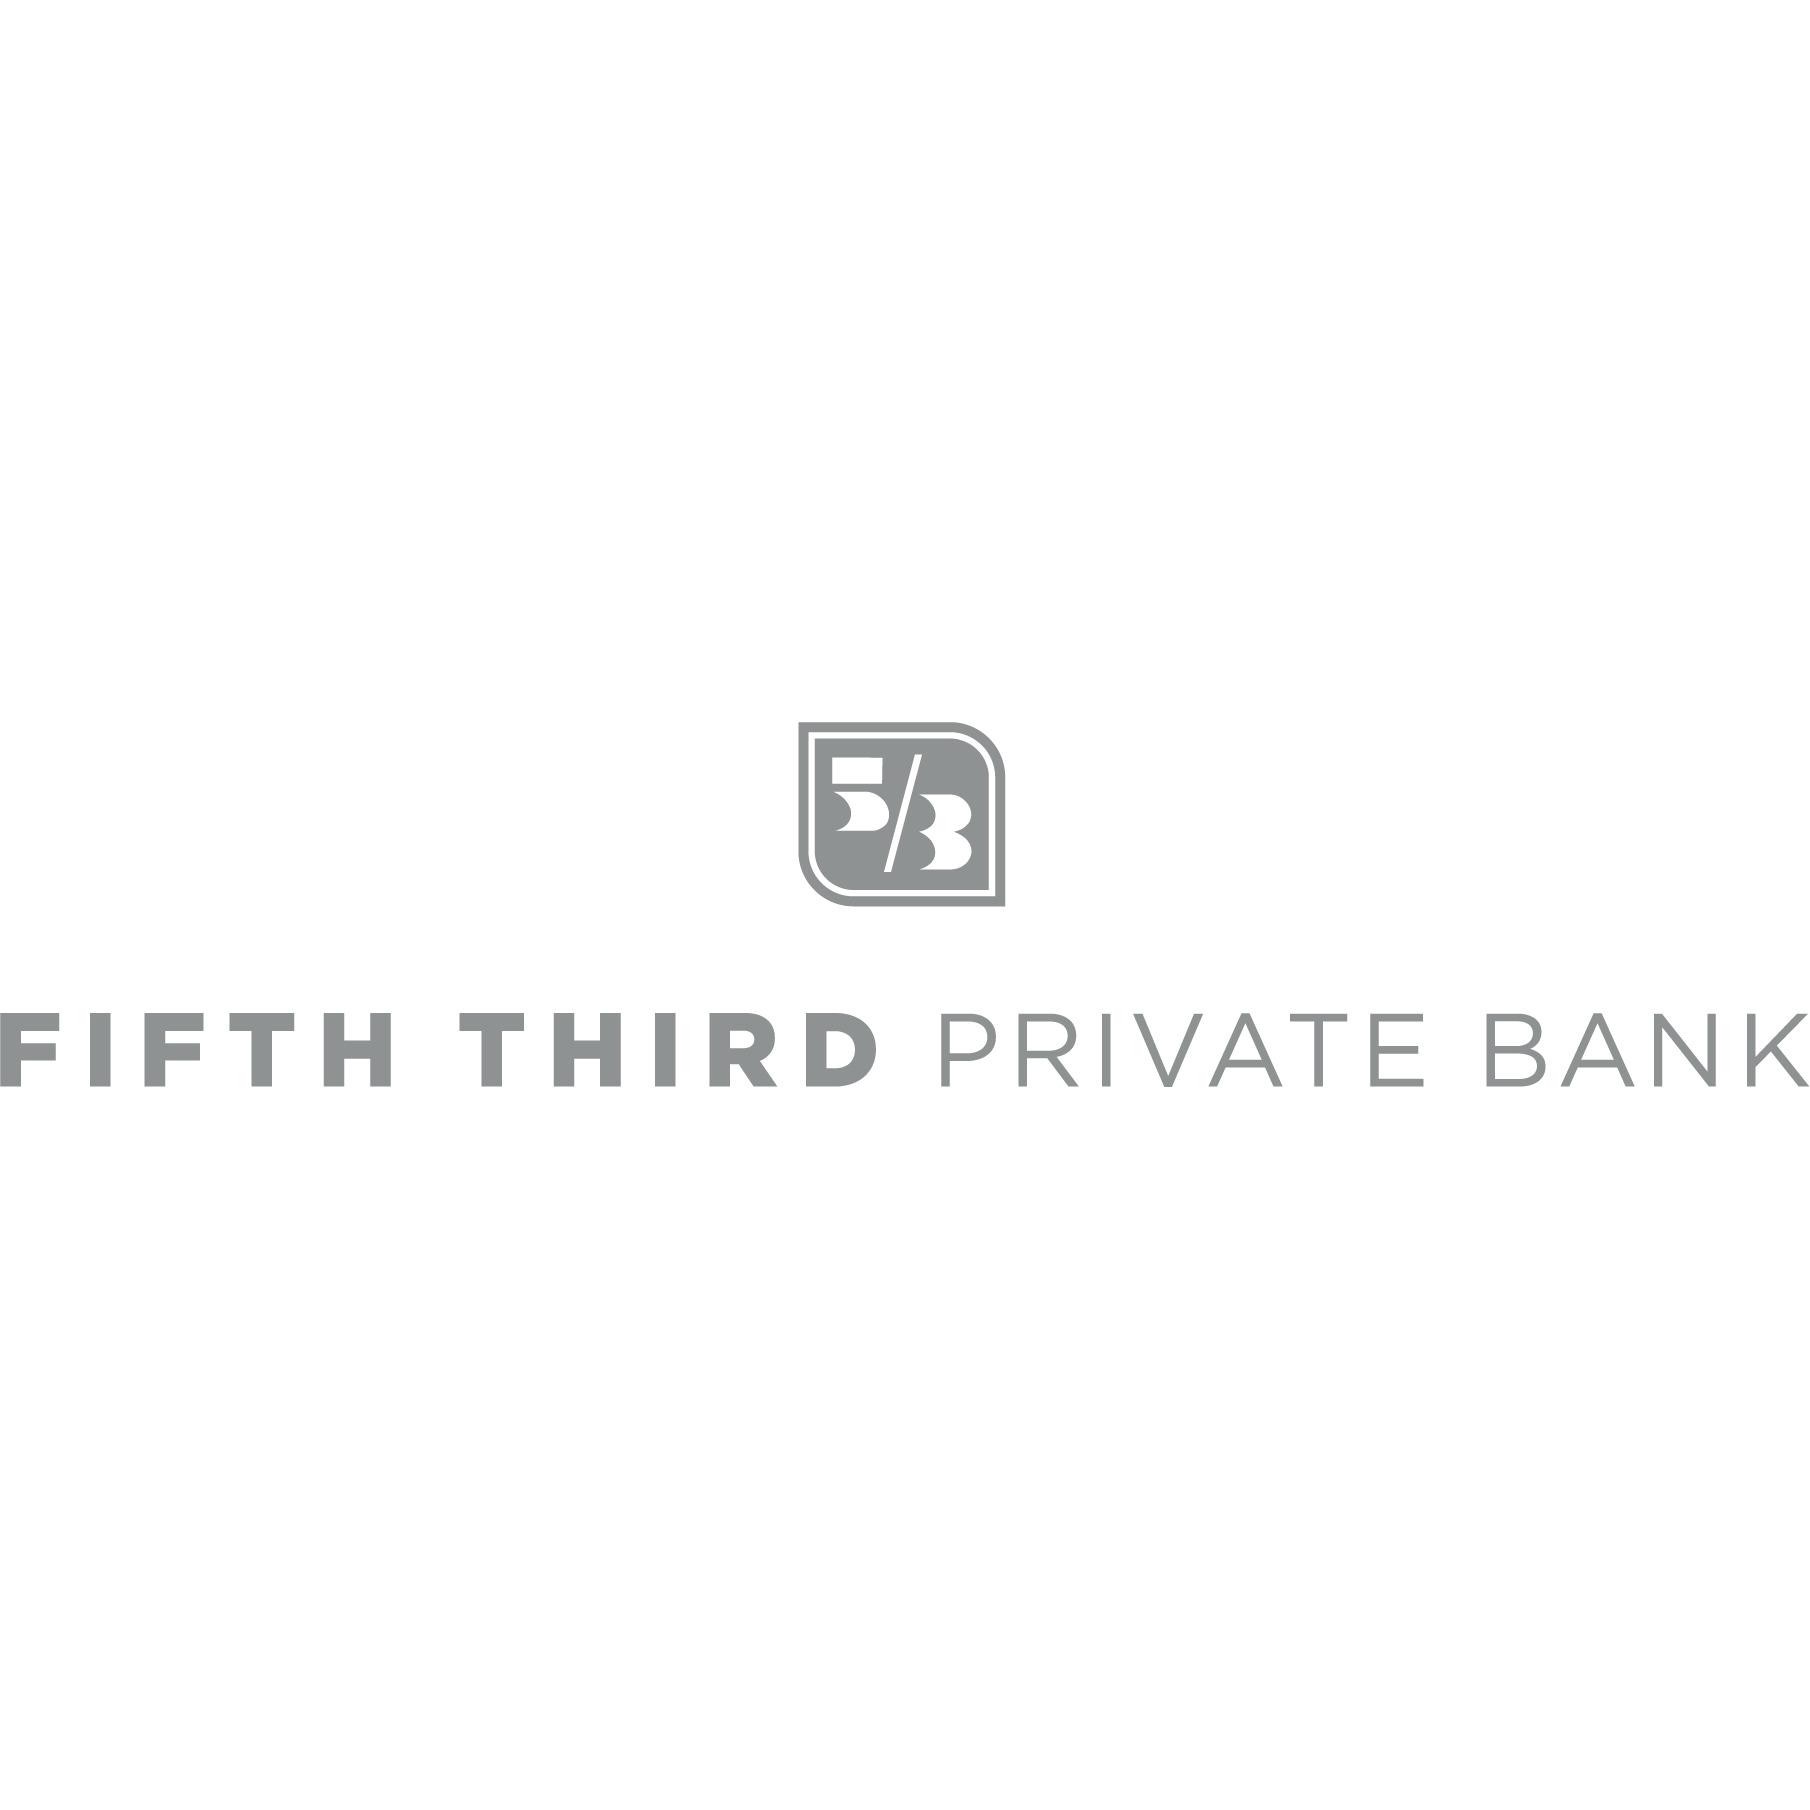 Fifth Third Private Bank - John Pisan